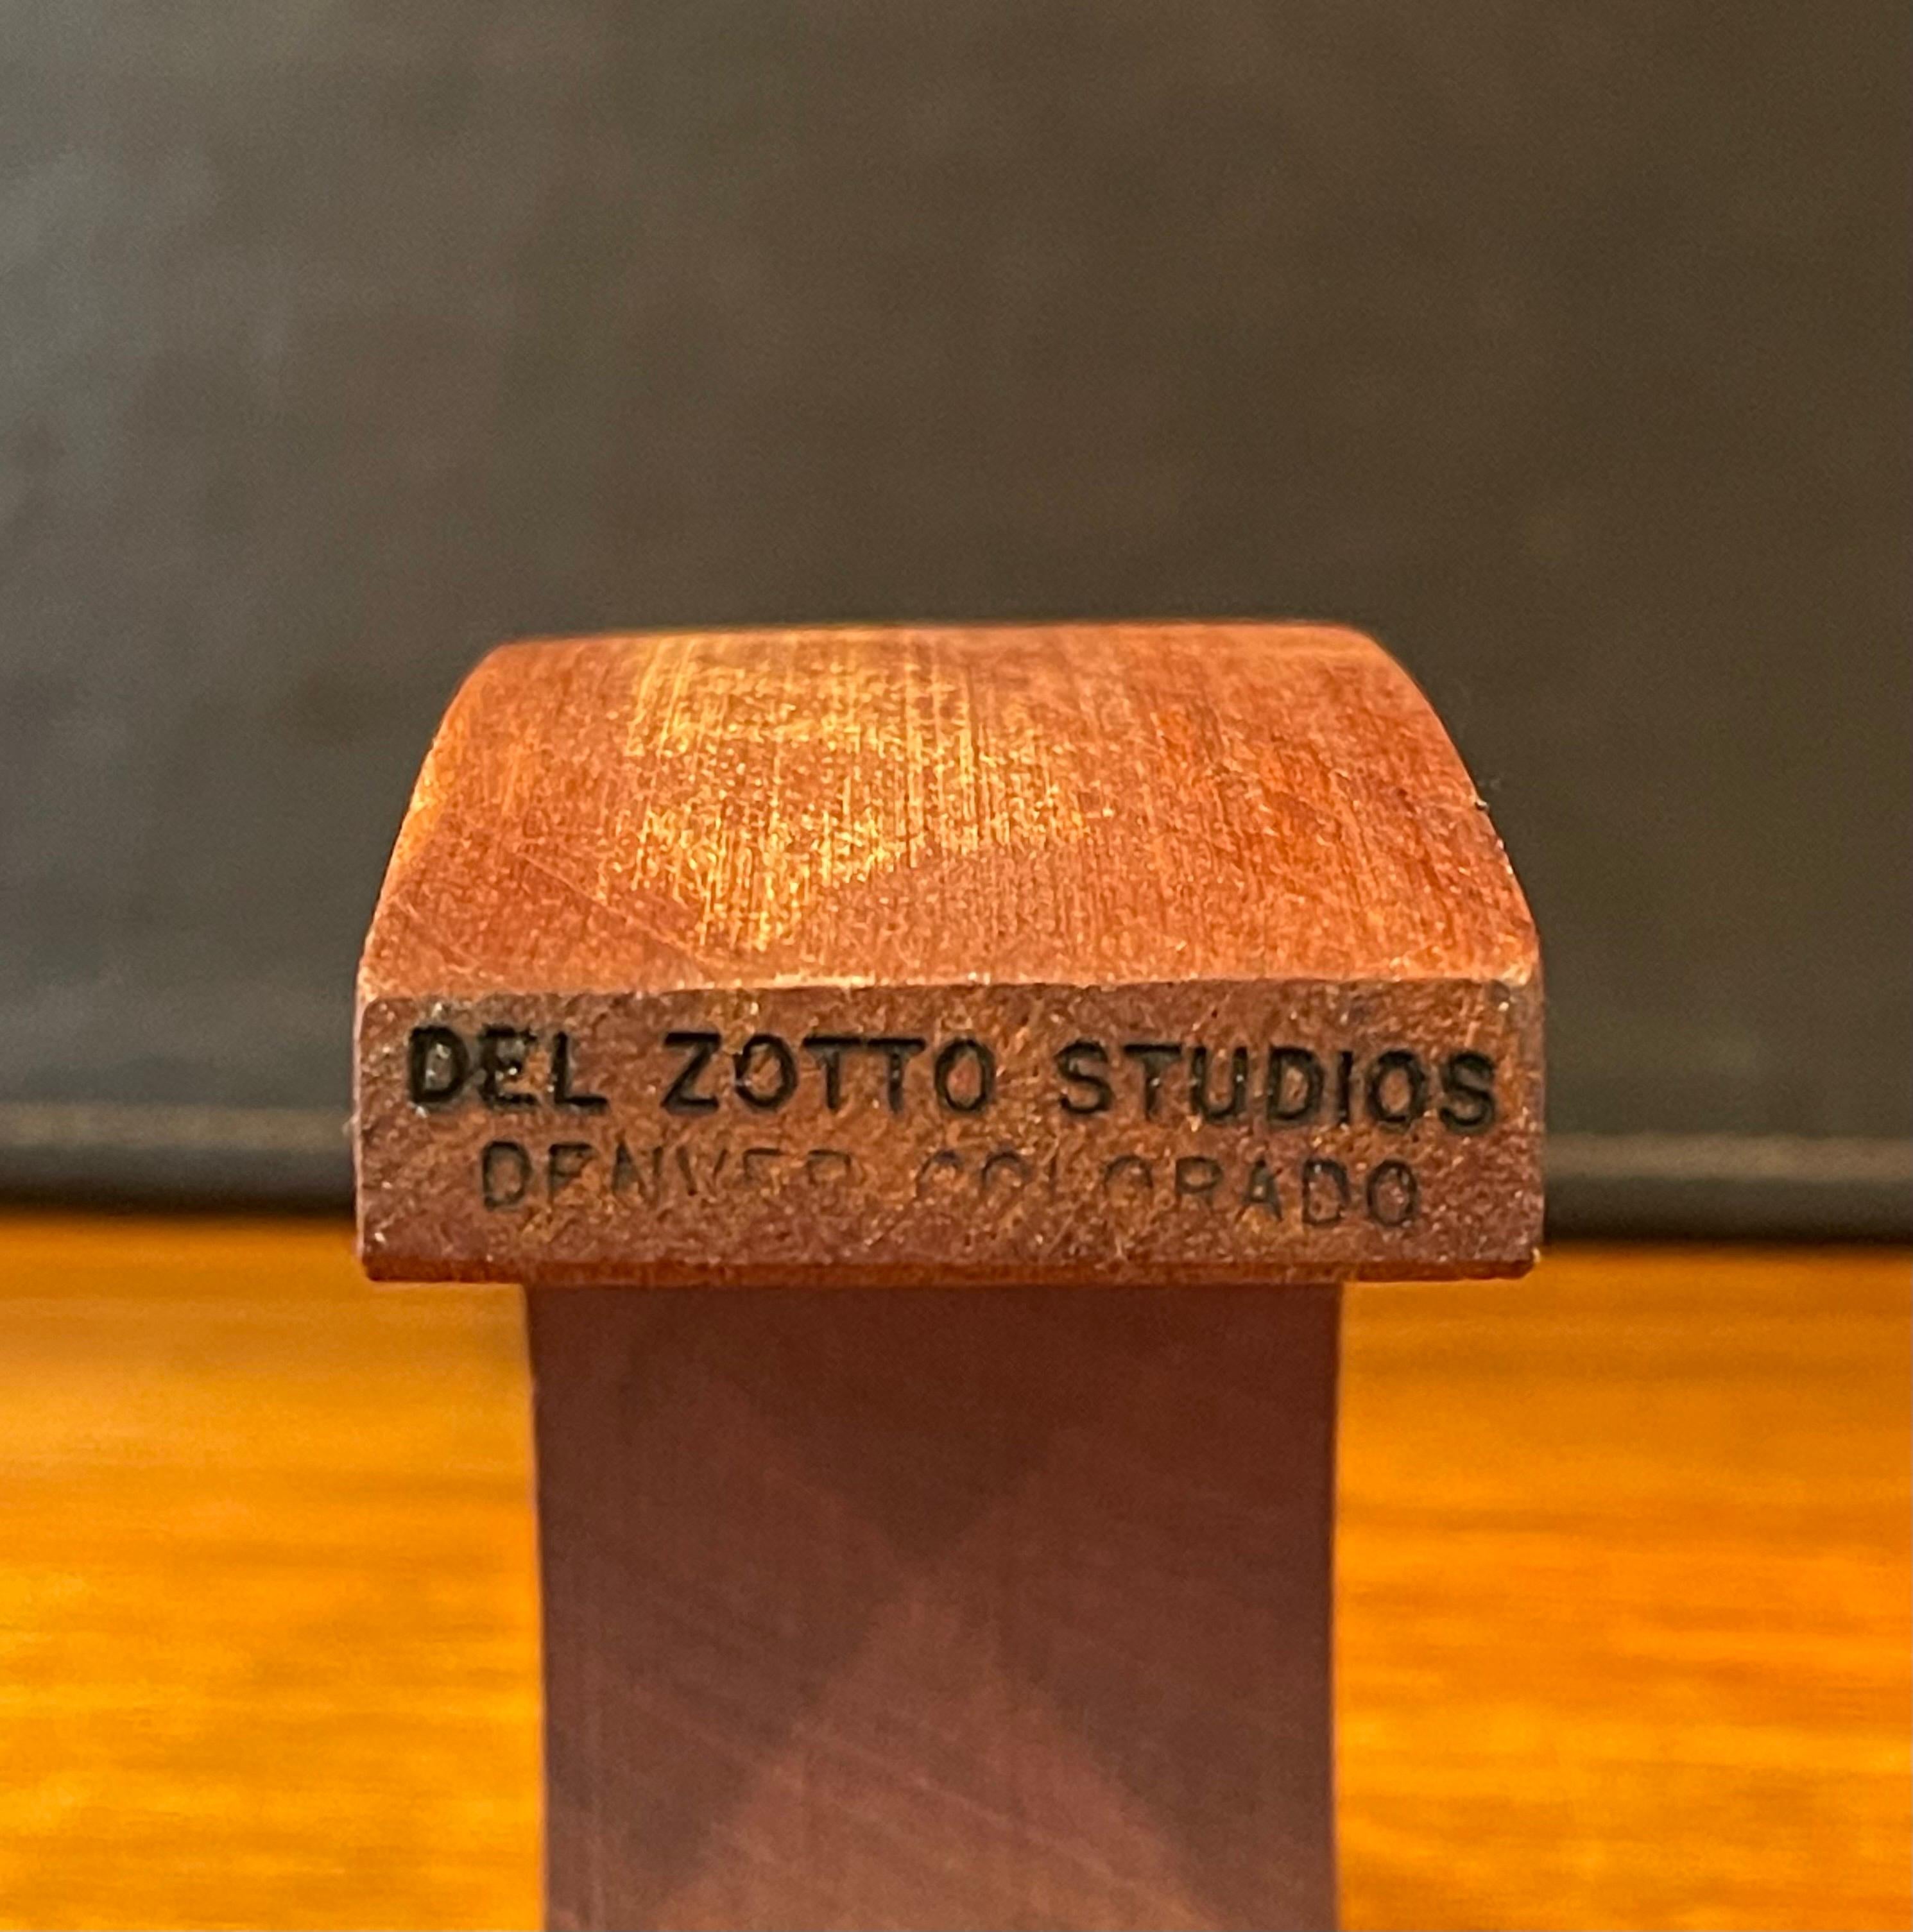 Ensemble de trois sculptures modernistes en bois de girafe par Del Zotto Studios en vente 9